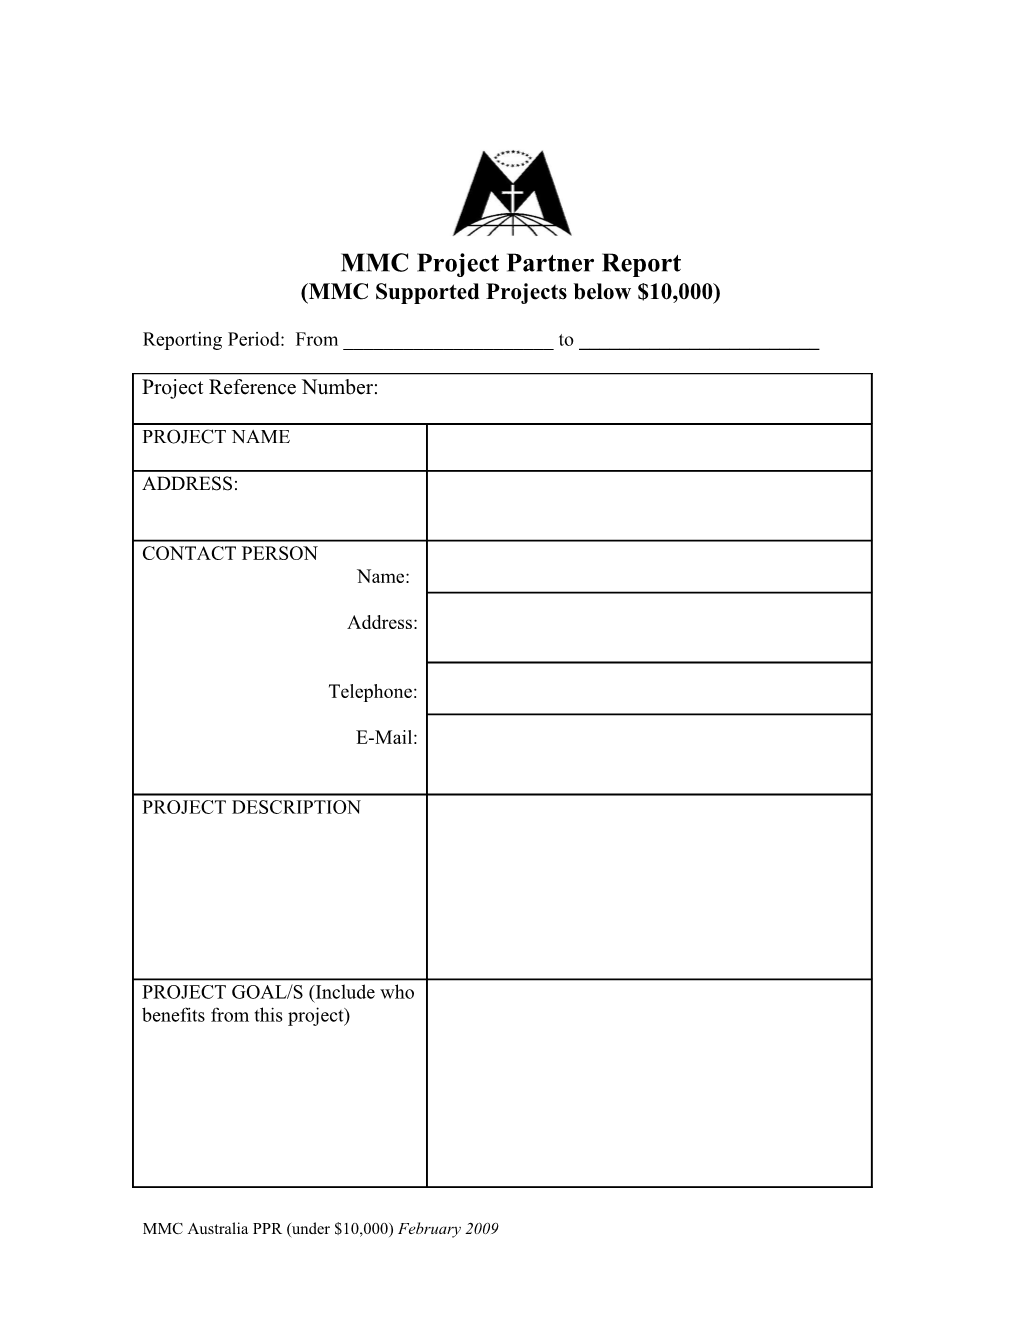 MMC Project Partner Report